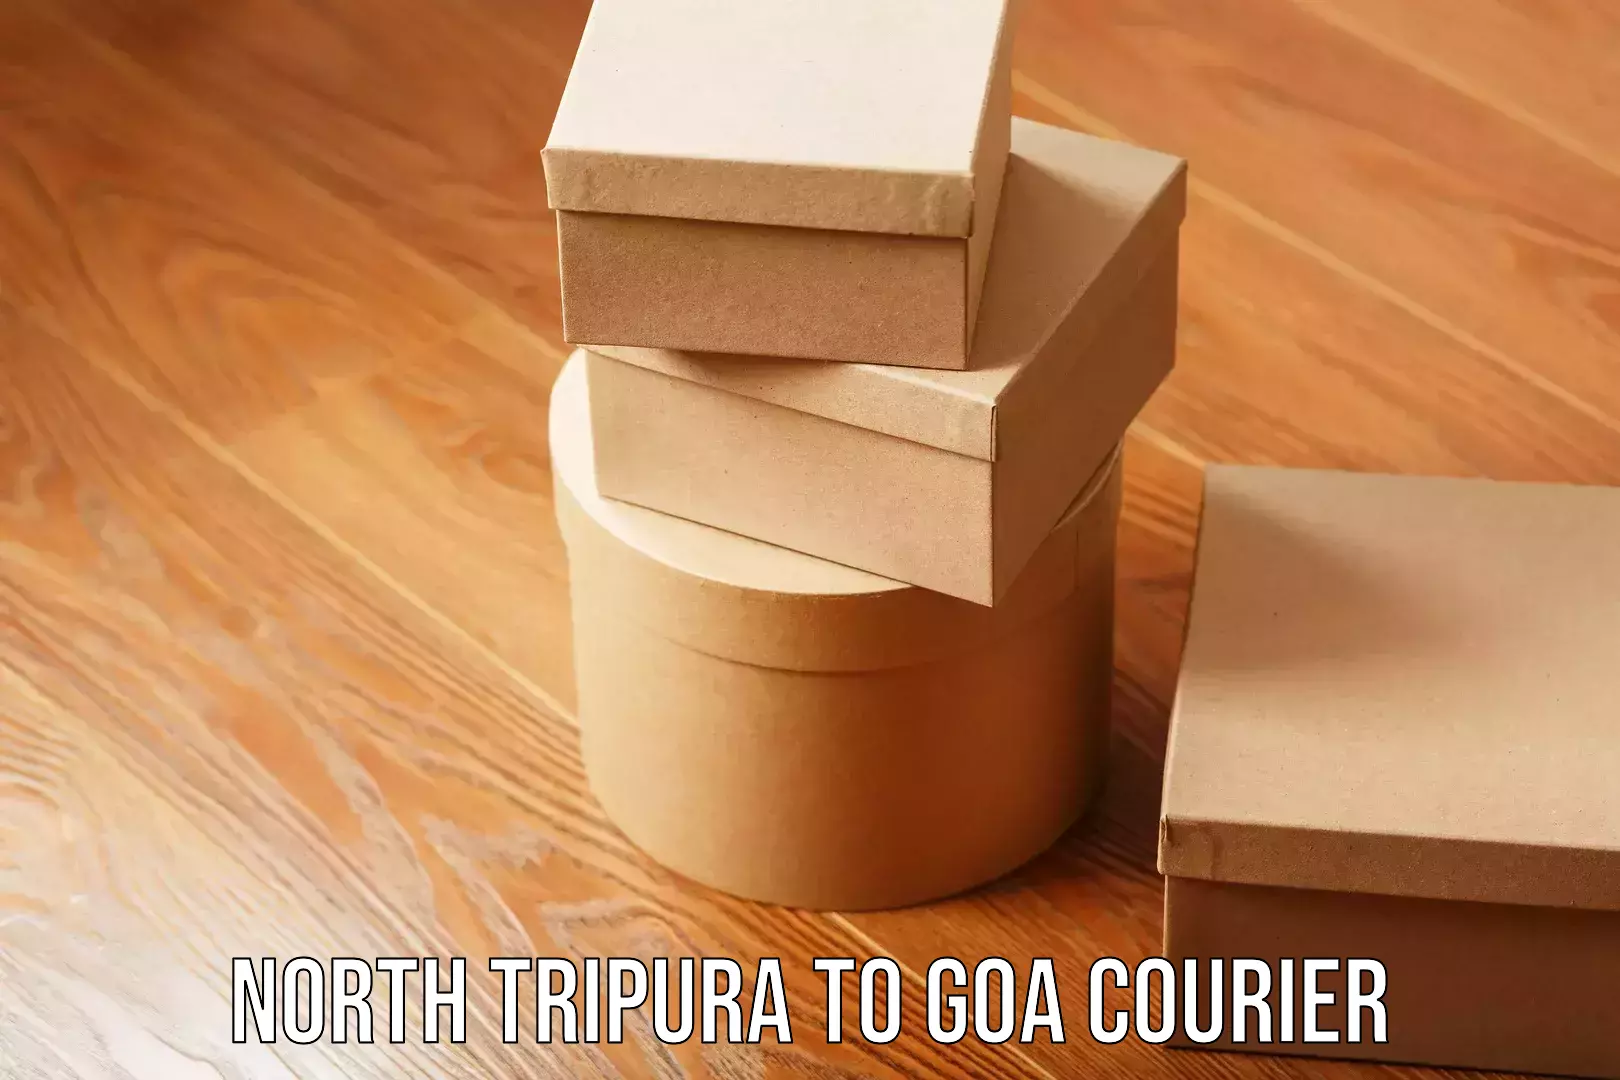 Tracking updates in North Tripura to Goa